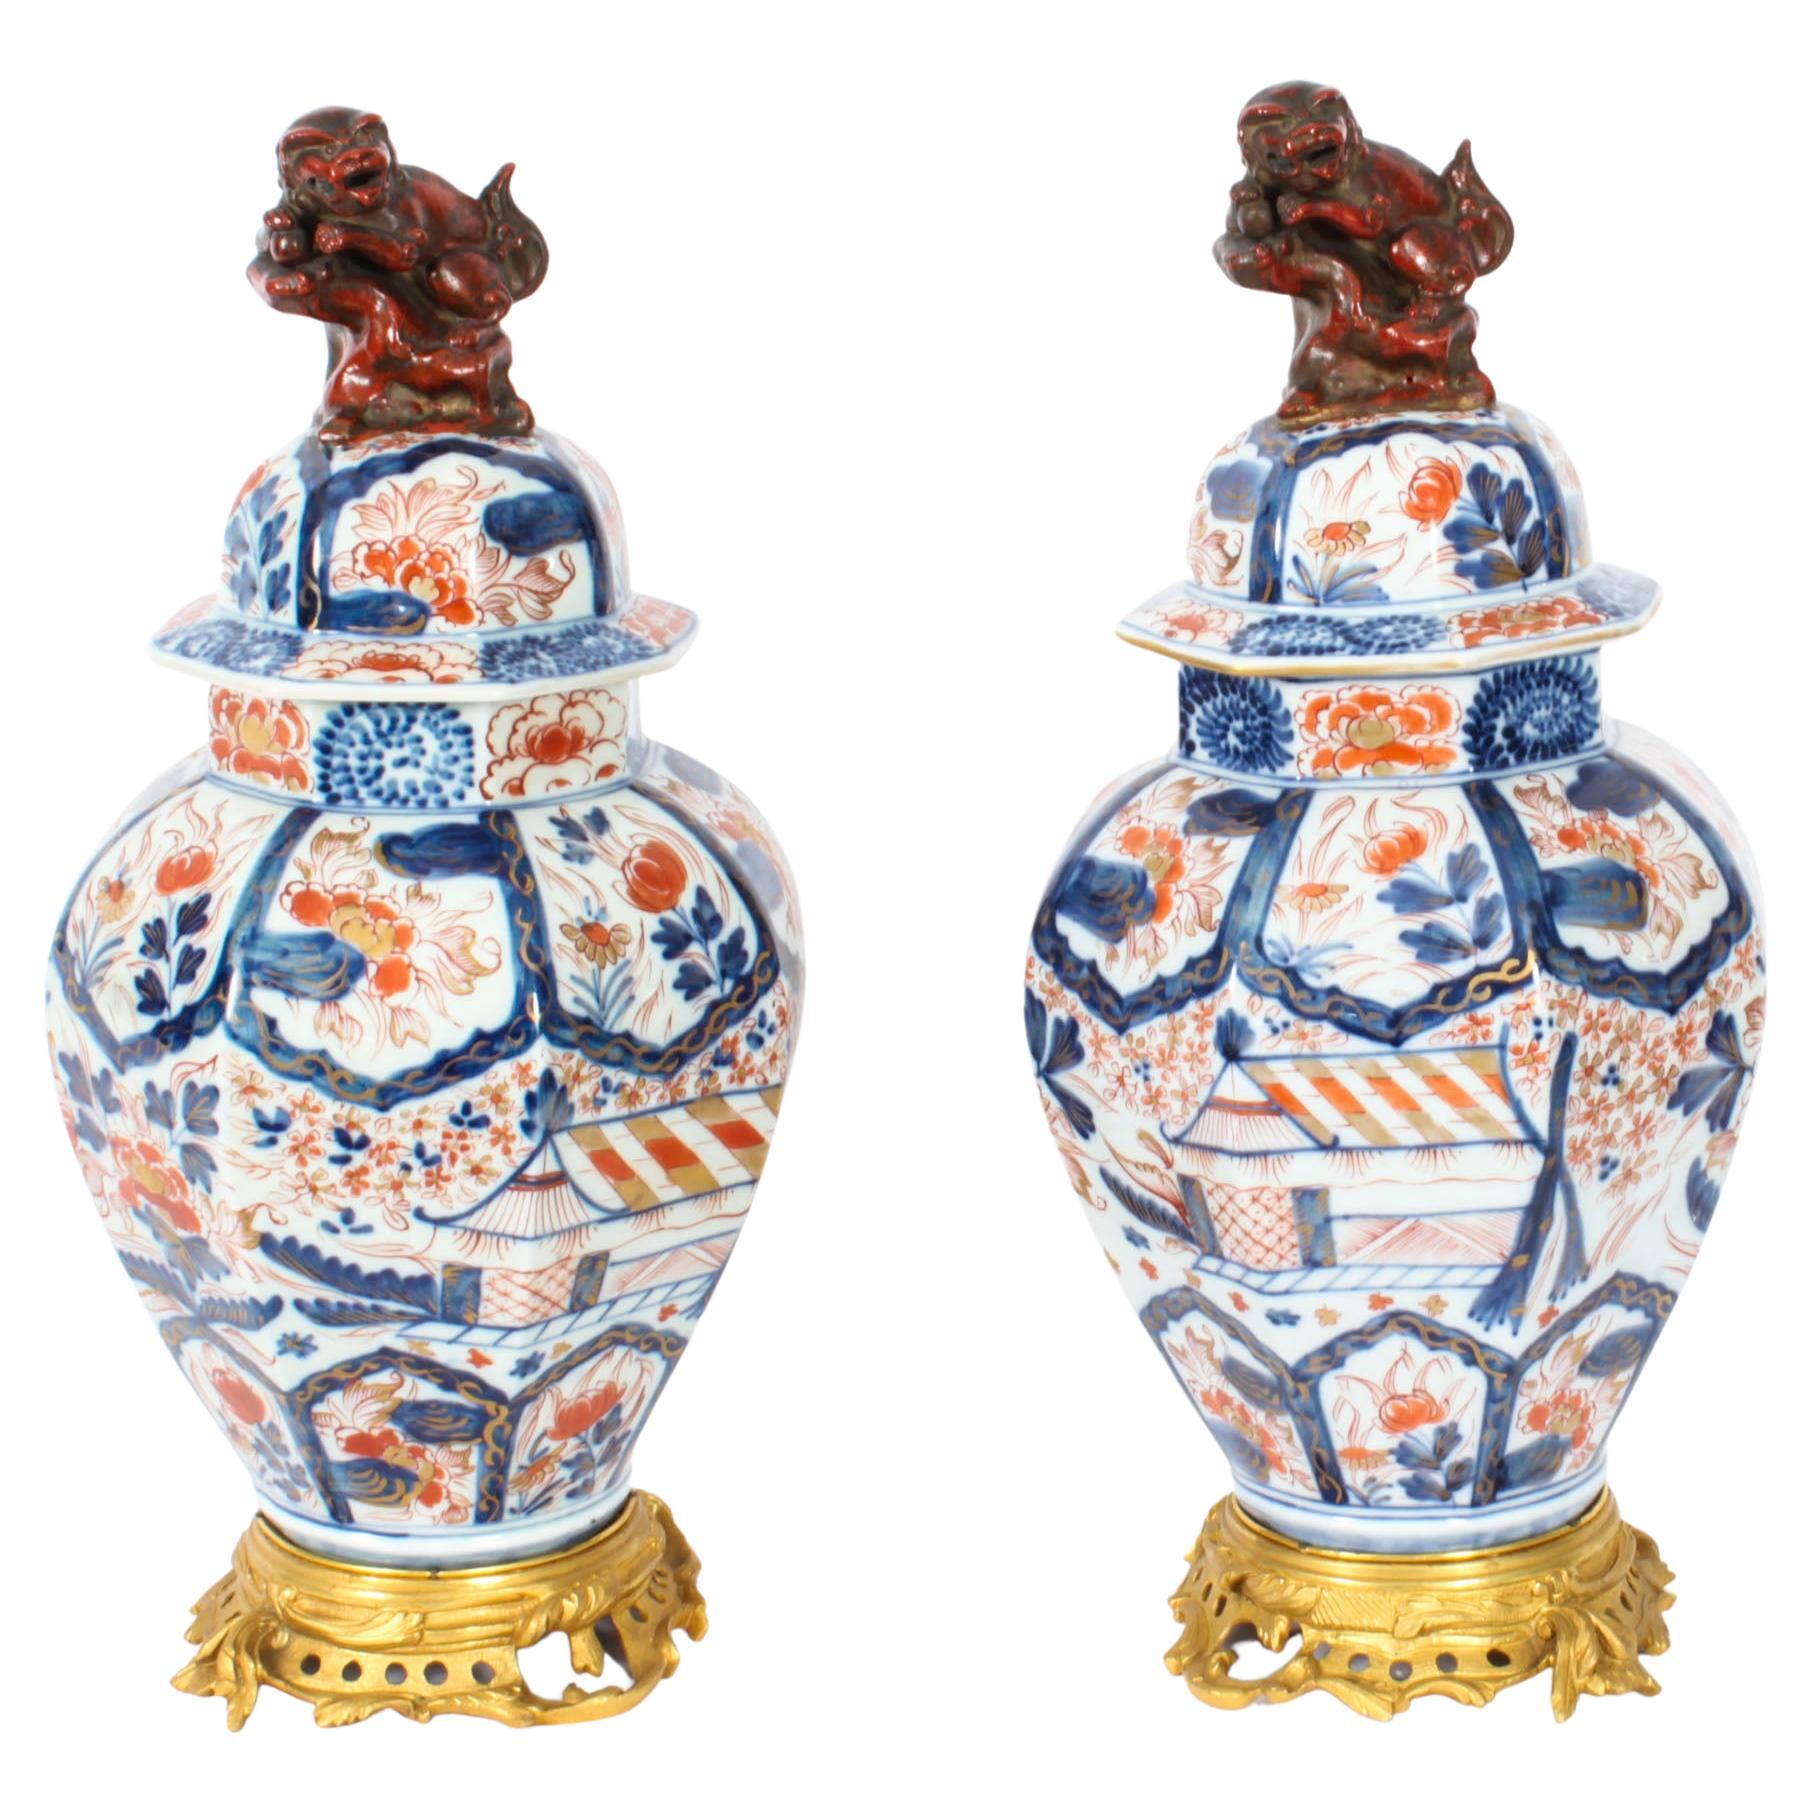 Antique Large Pair Japanese Imari Porcelain Vases on Stands, 18th Century